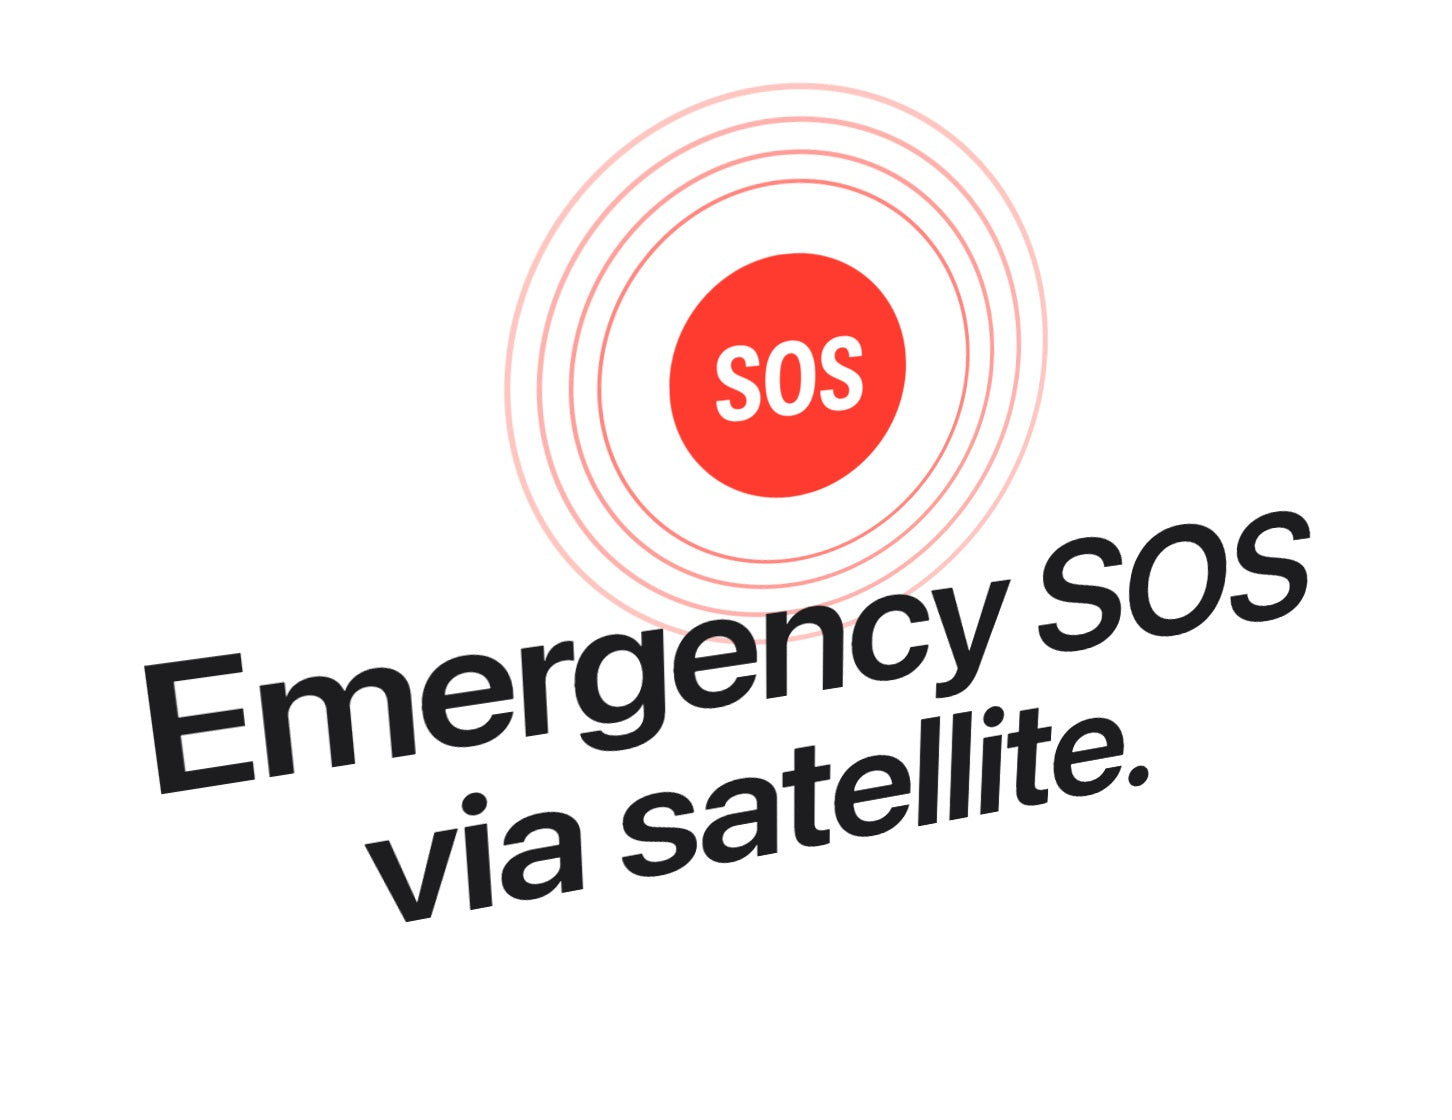 Emergency SOS via satellite.